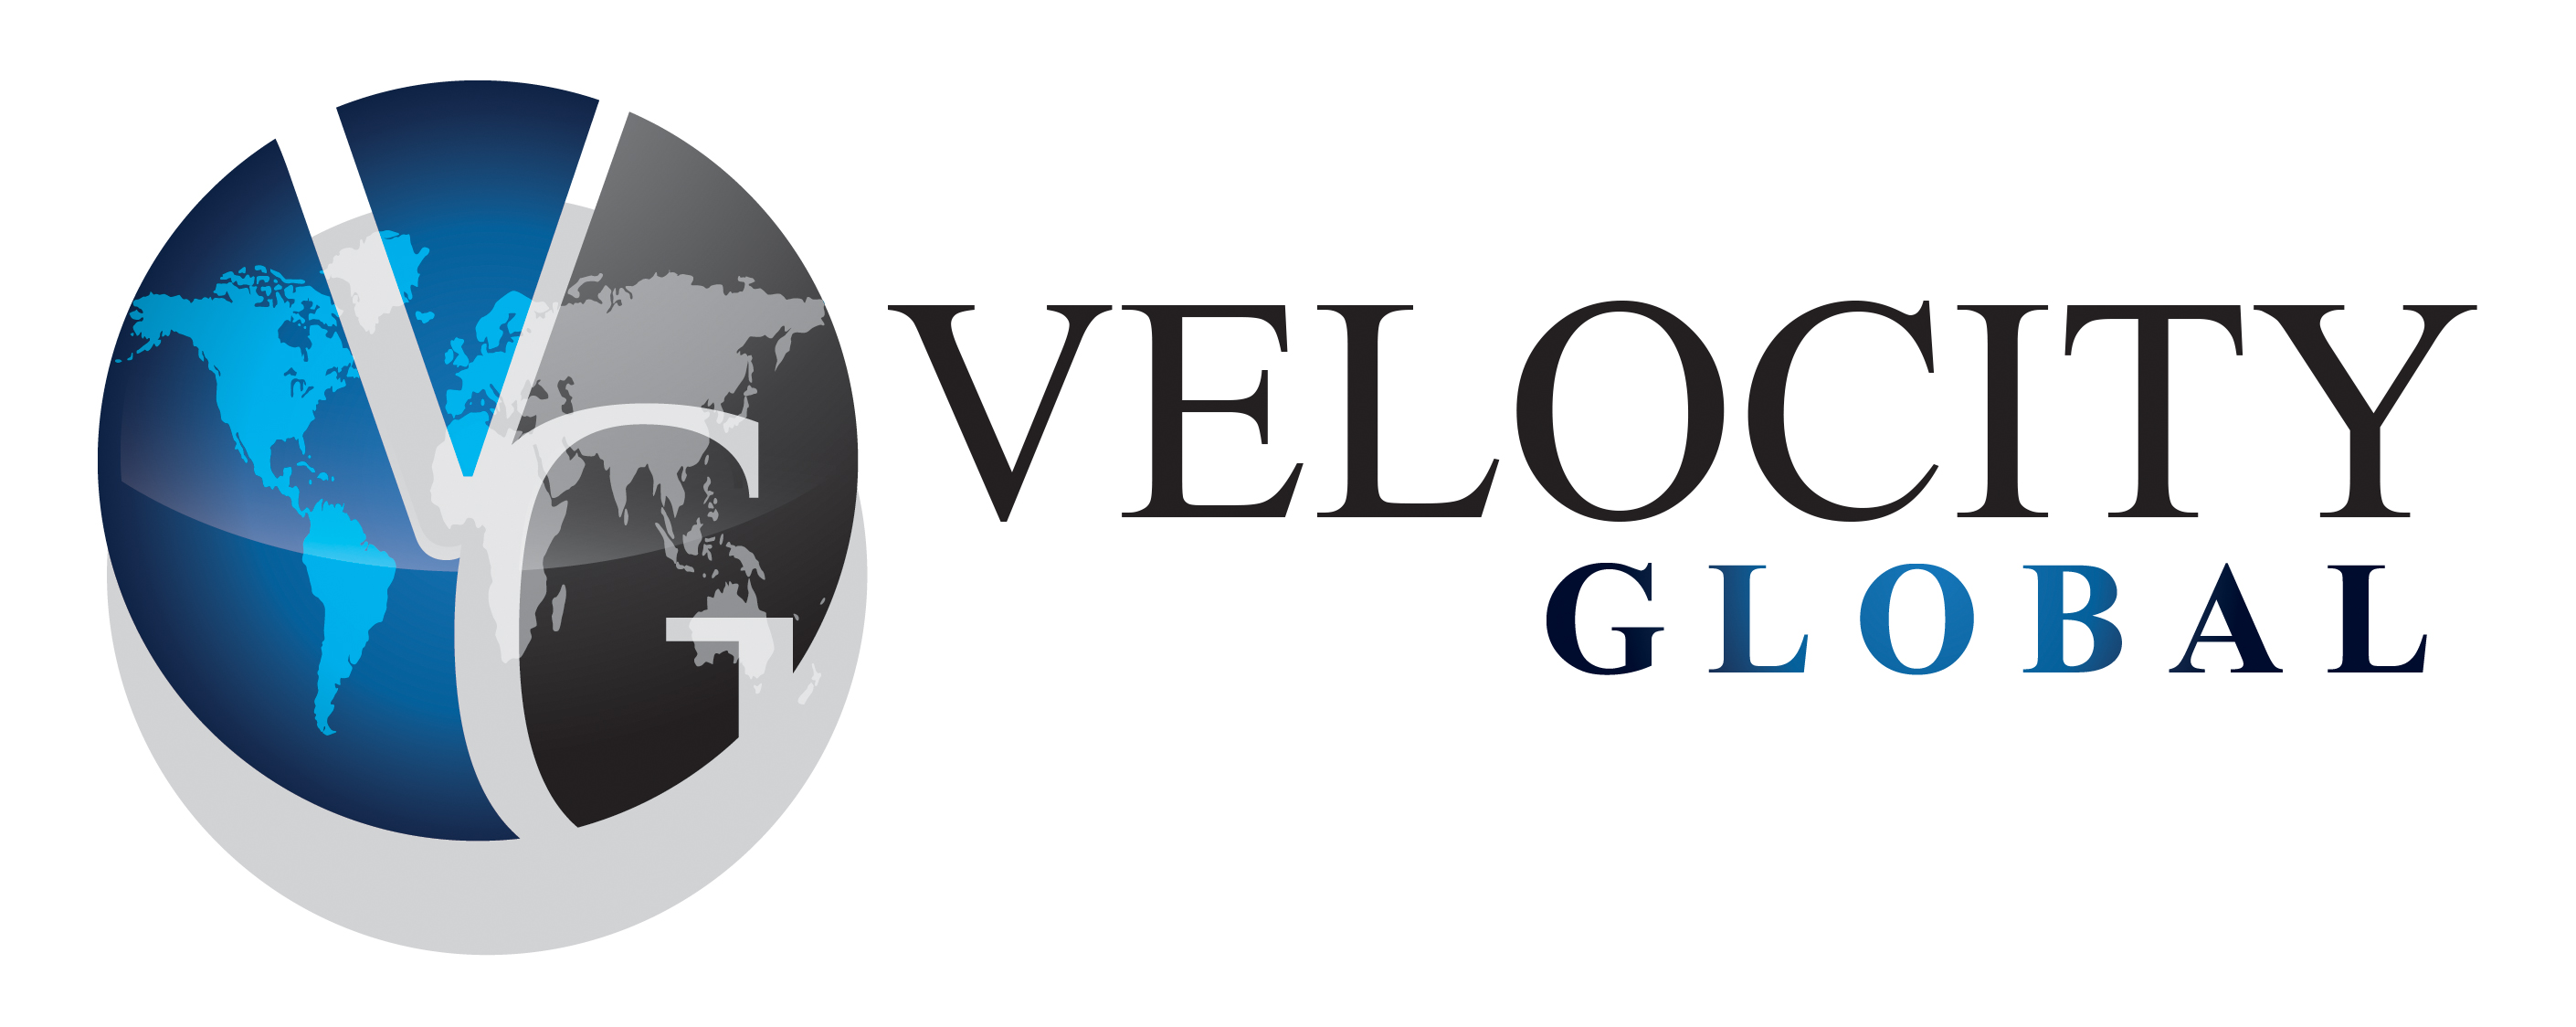 Velocity Global Laun